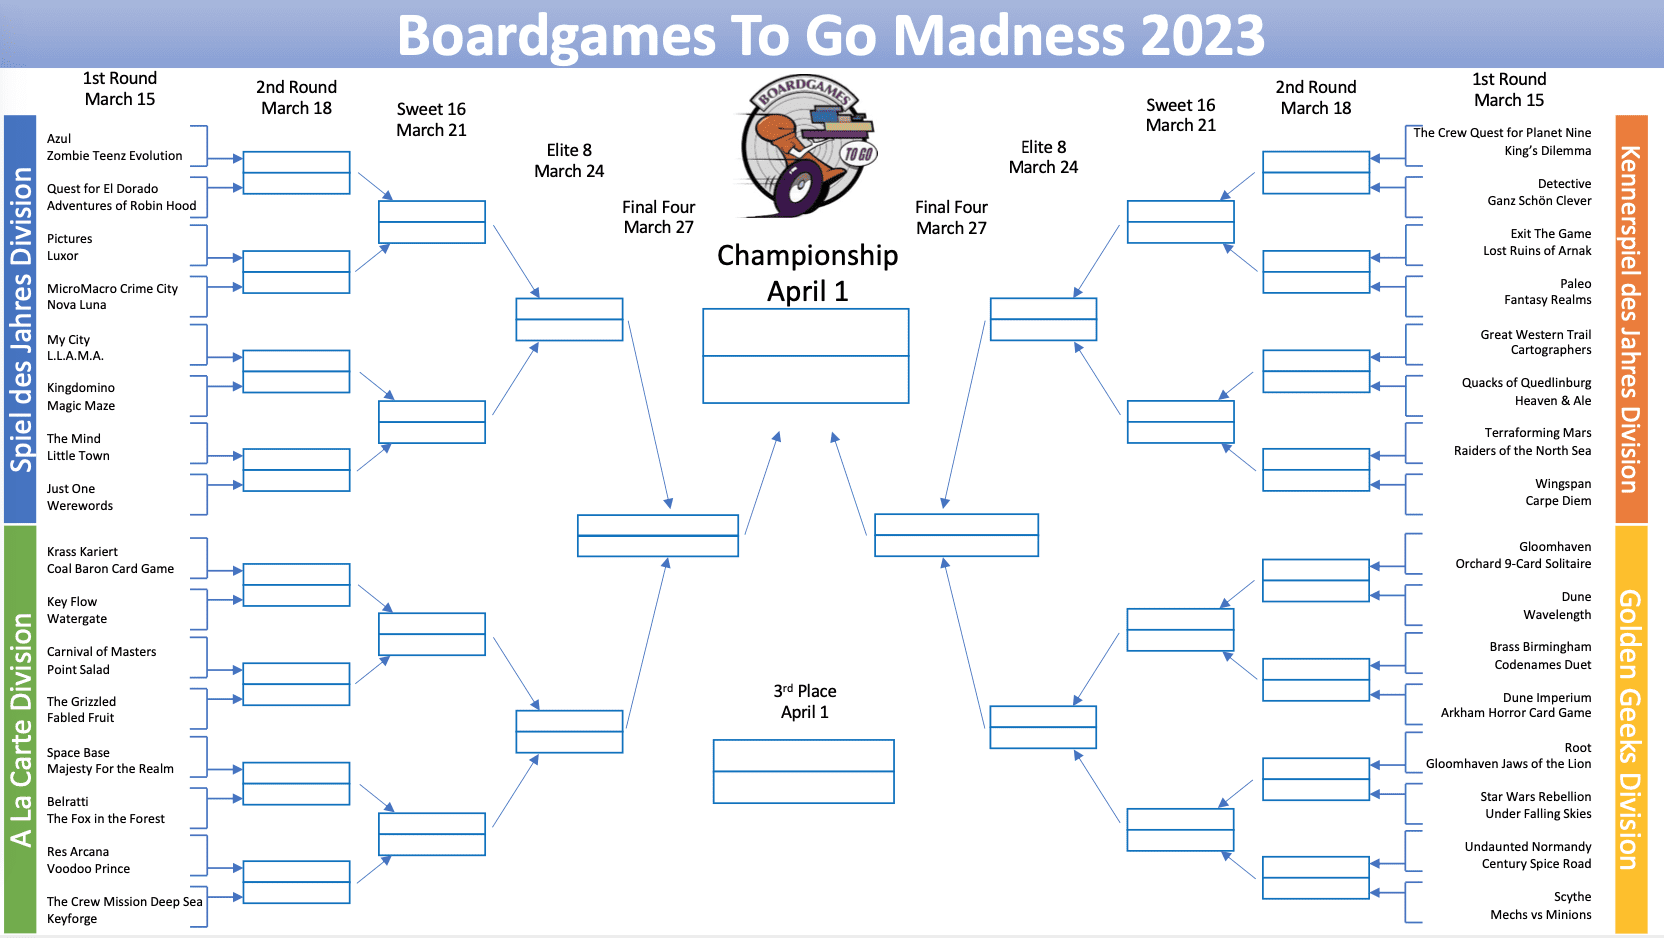 Boardgames To Go Madness 2023 bracket